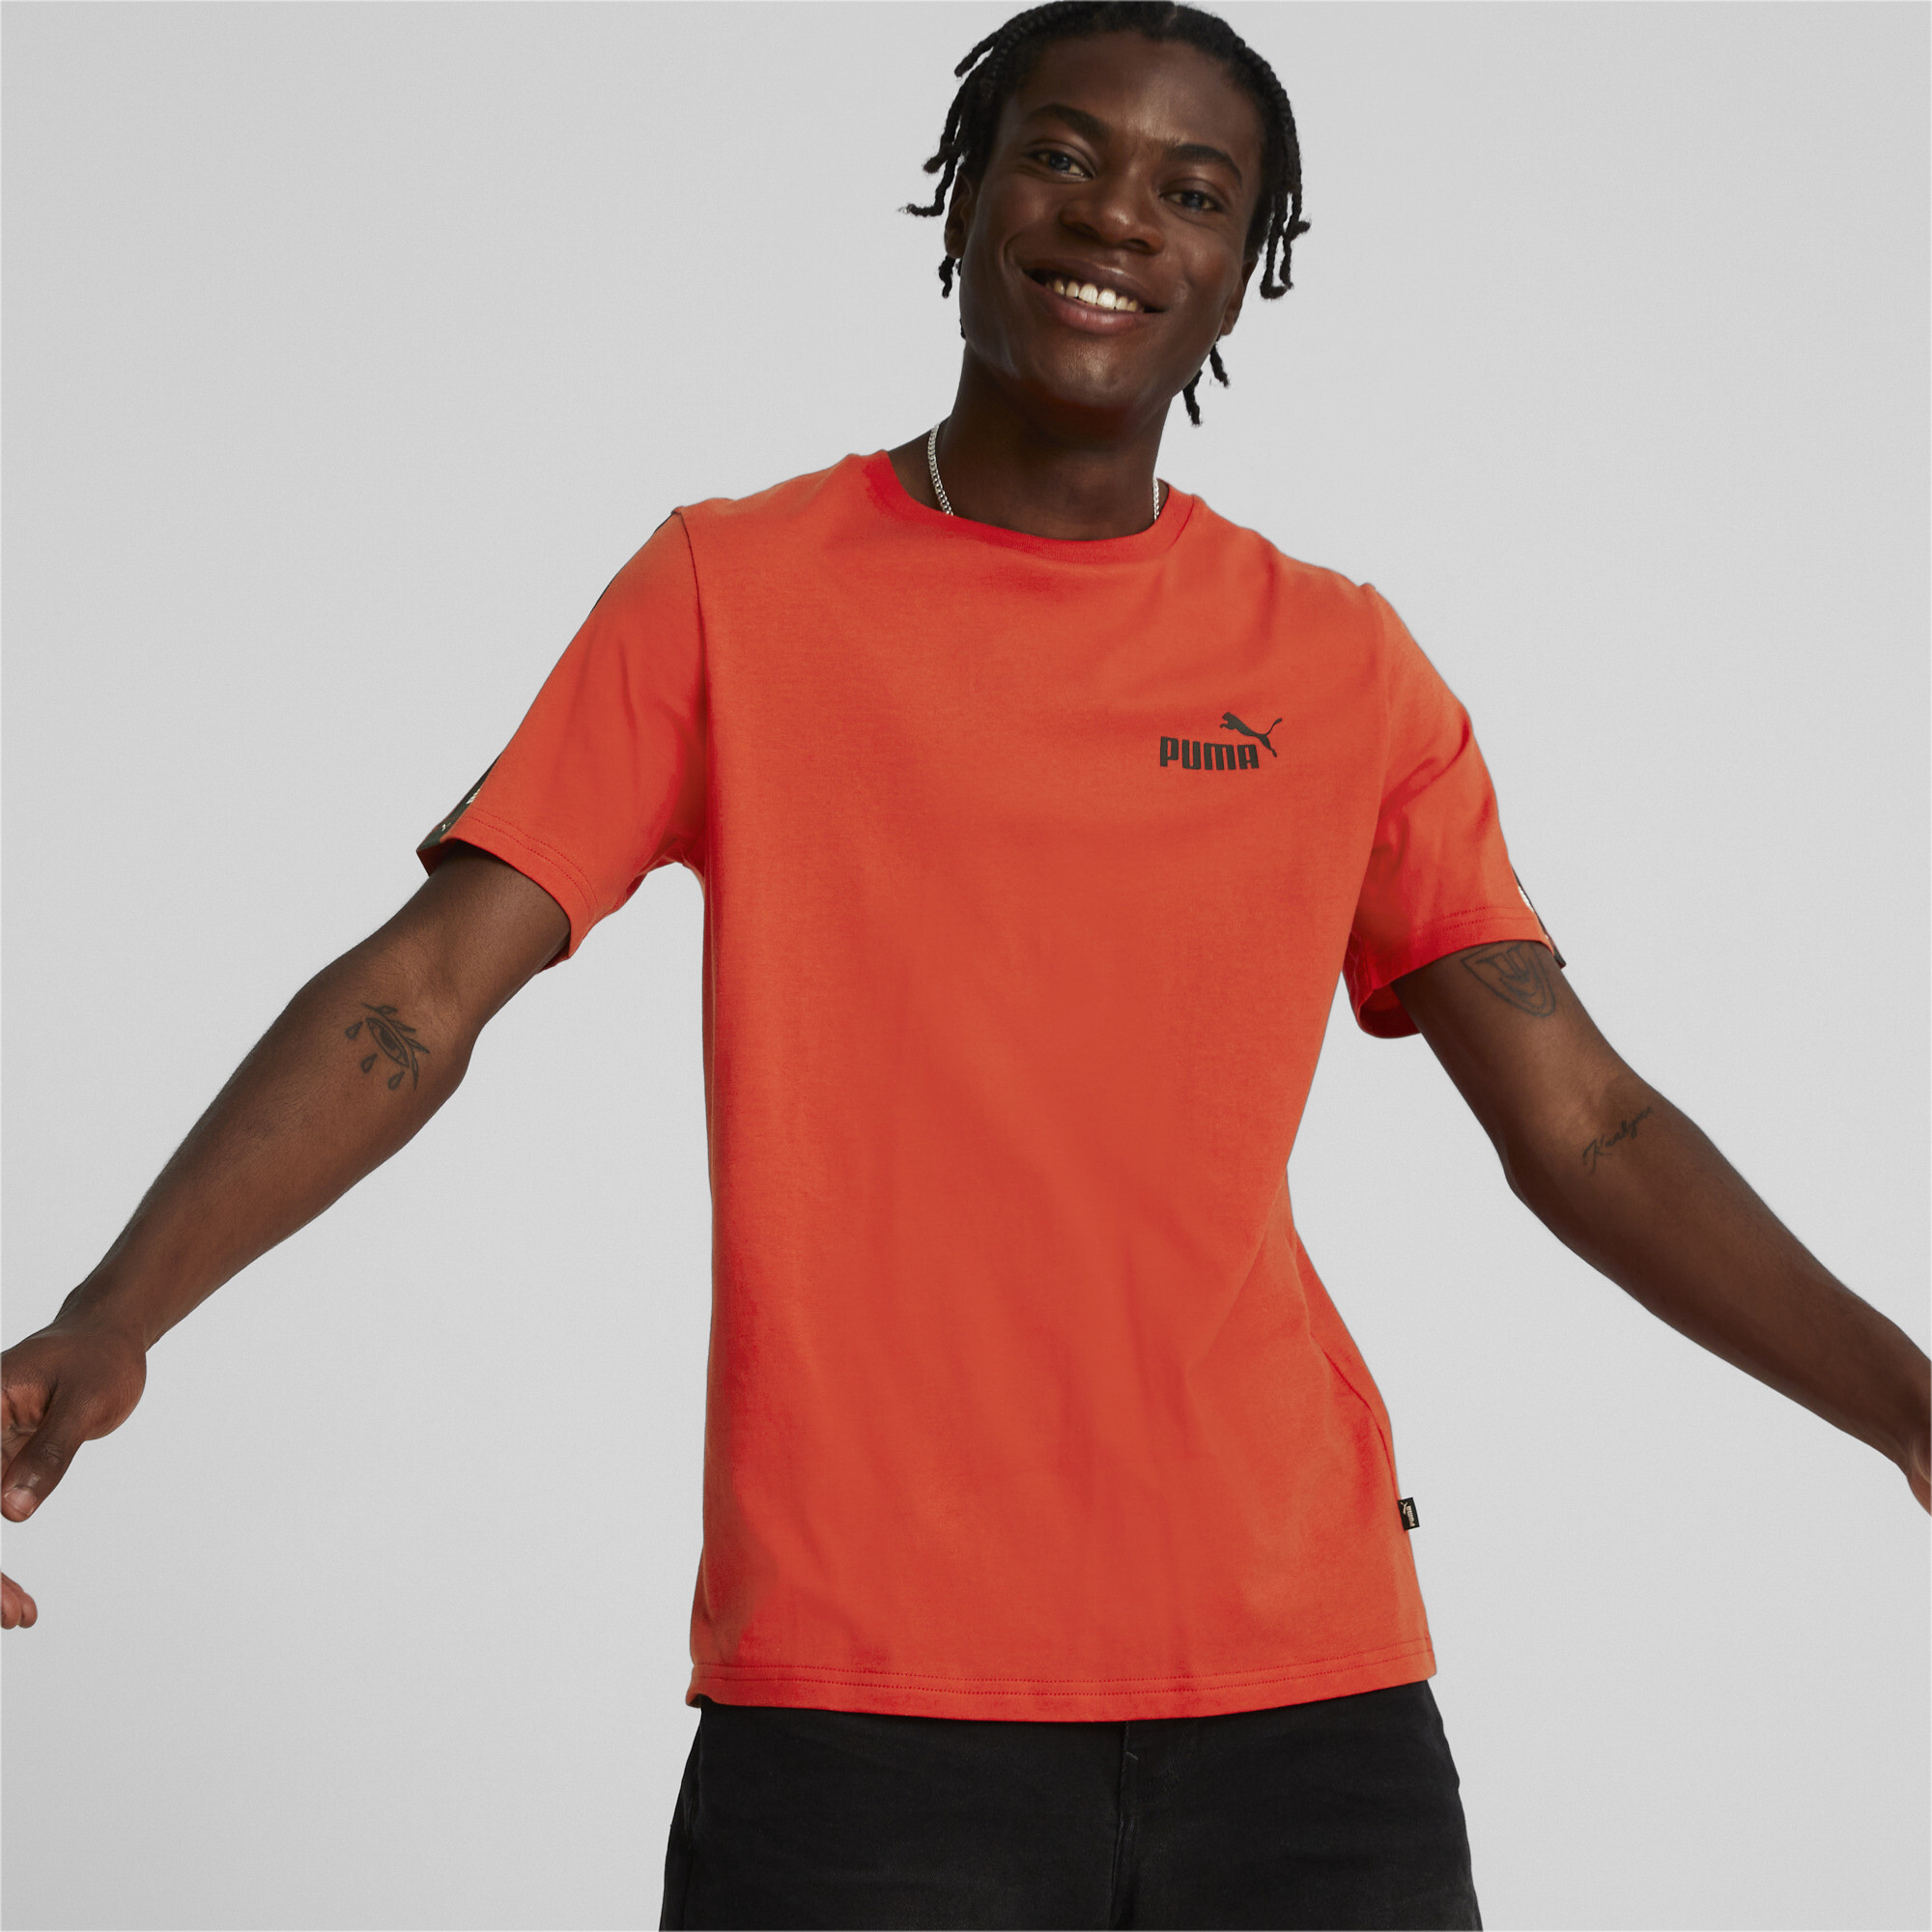 PUMA Essentials+ Tape T-Shirt Tee Top Crew Neck Short Sleeves Mens | eBay